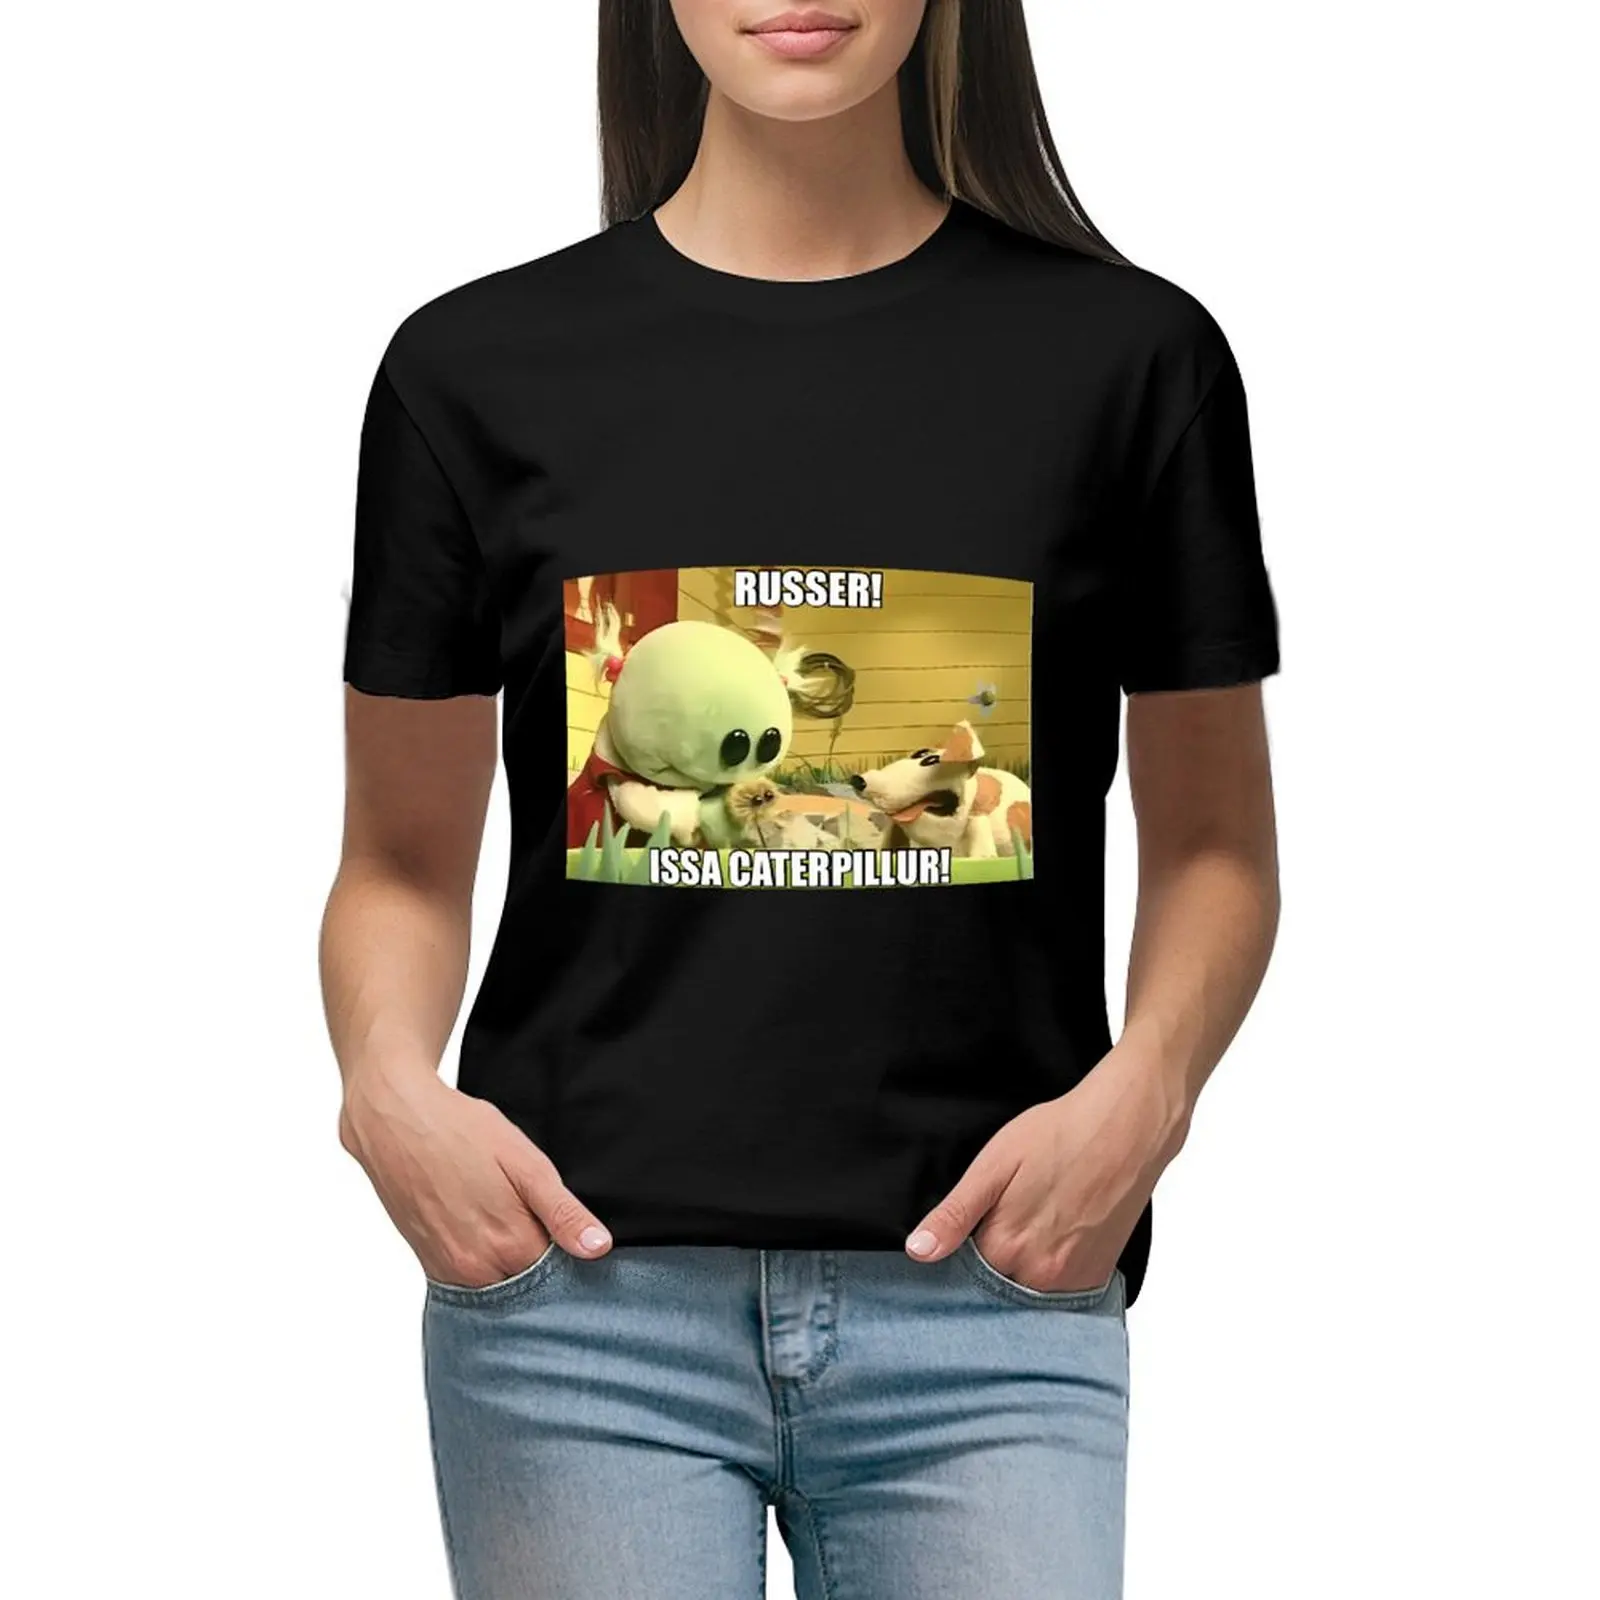 

Russer Issa Caterpillur (Meme) T-shirt tees plus size tops cute clothes tight shirts for Women